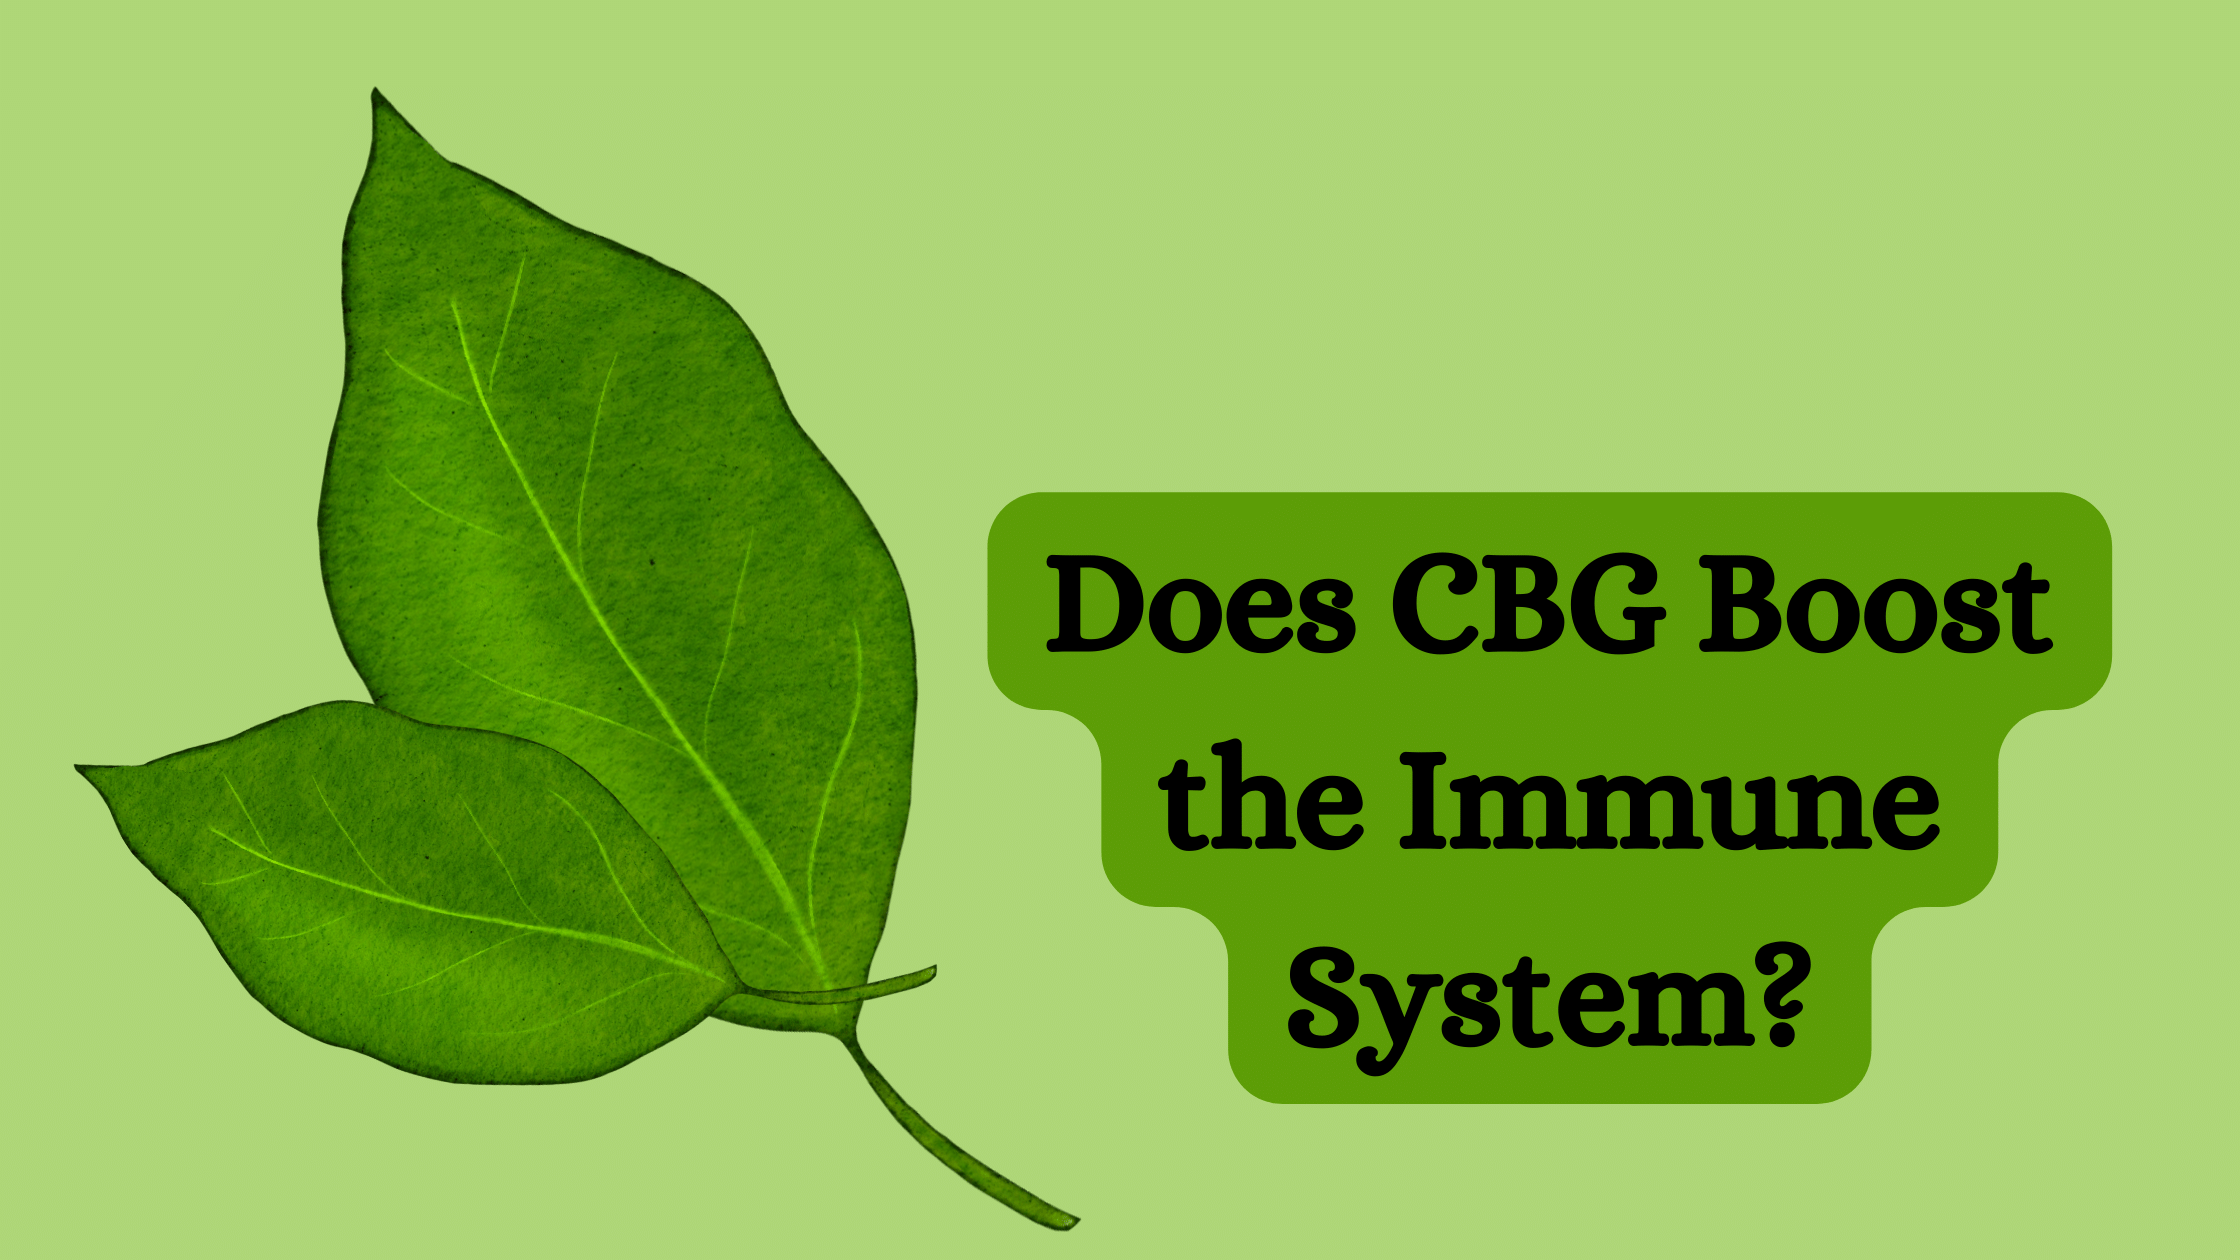 CBG Boost the Immune System